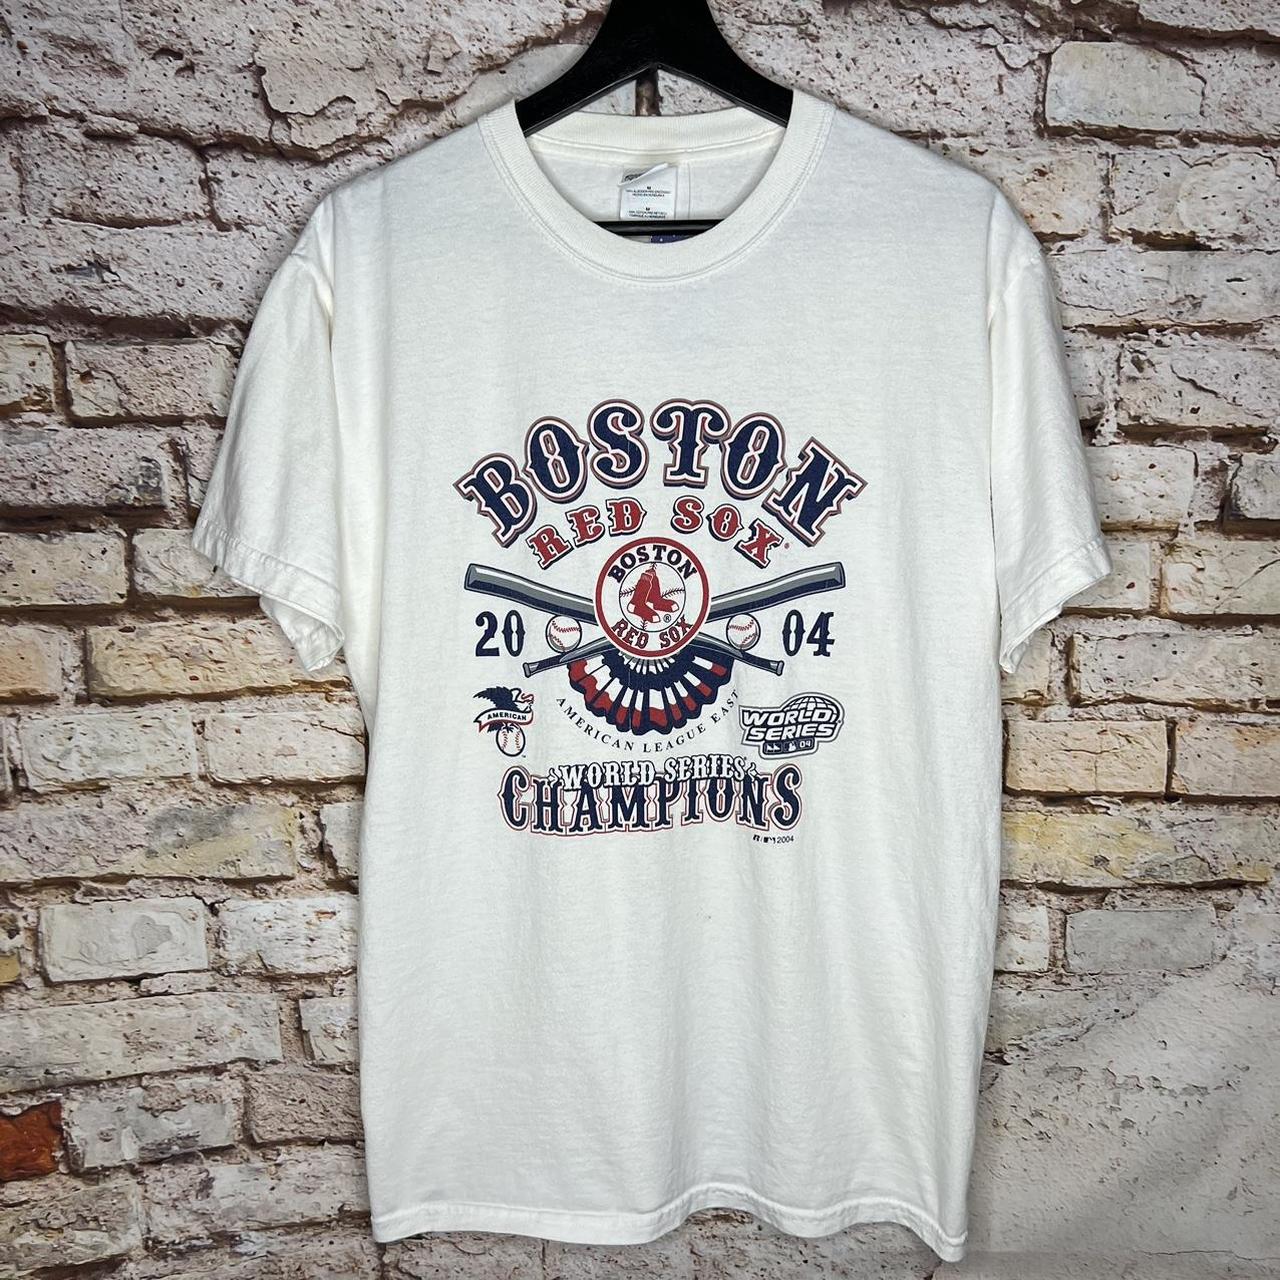 Boston Red Sox 2004 World Series Champions T Shirt Adidas MLB